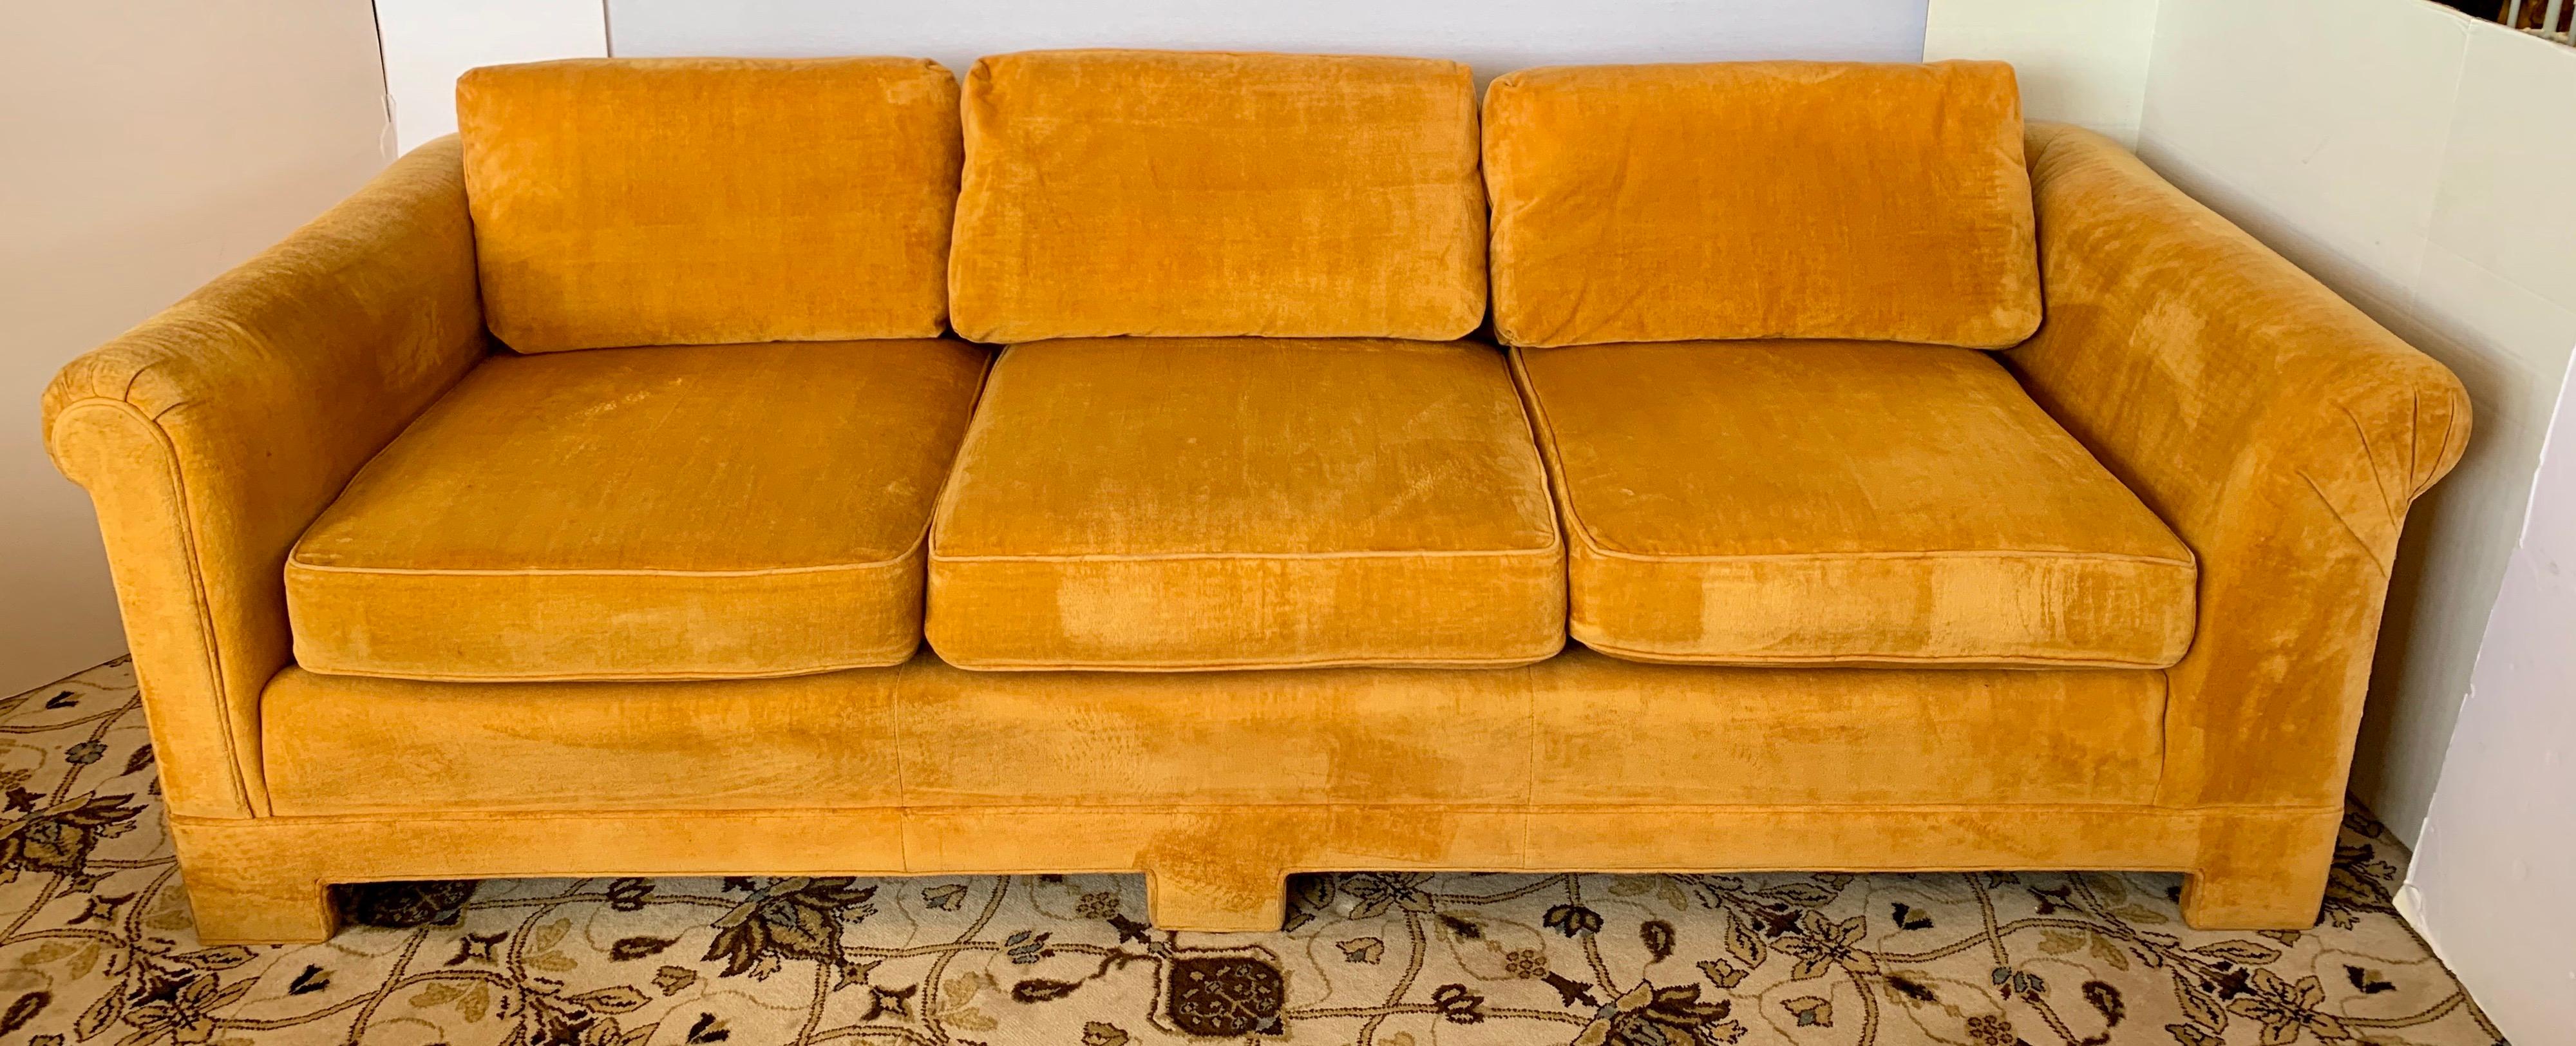 hermes orange sofa